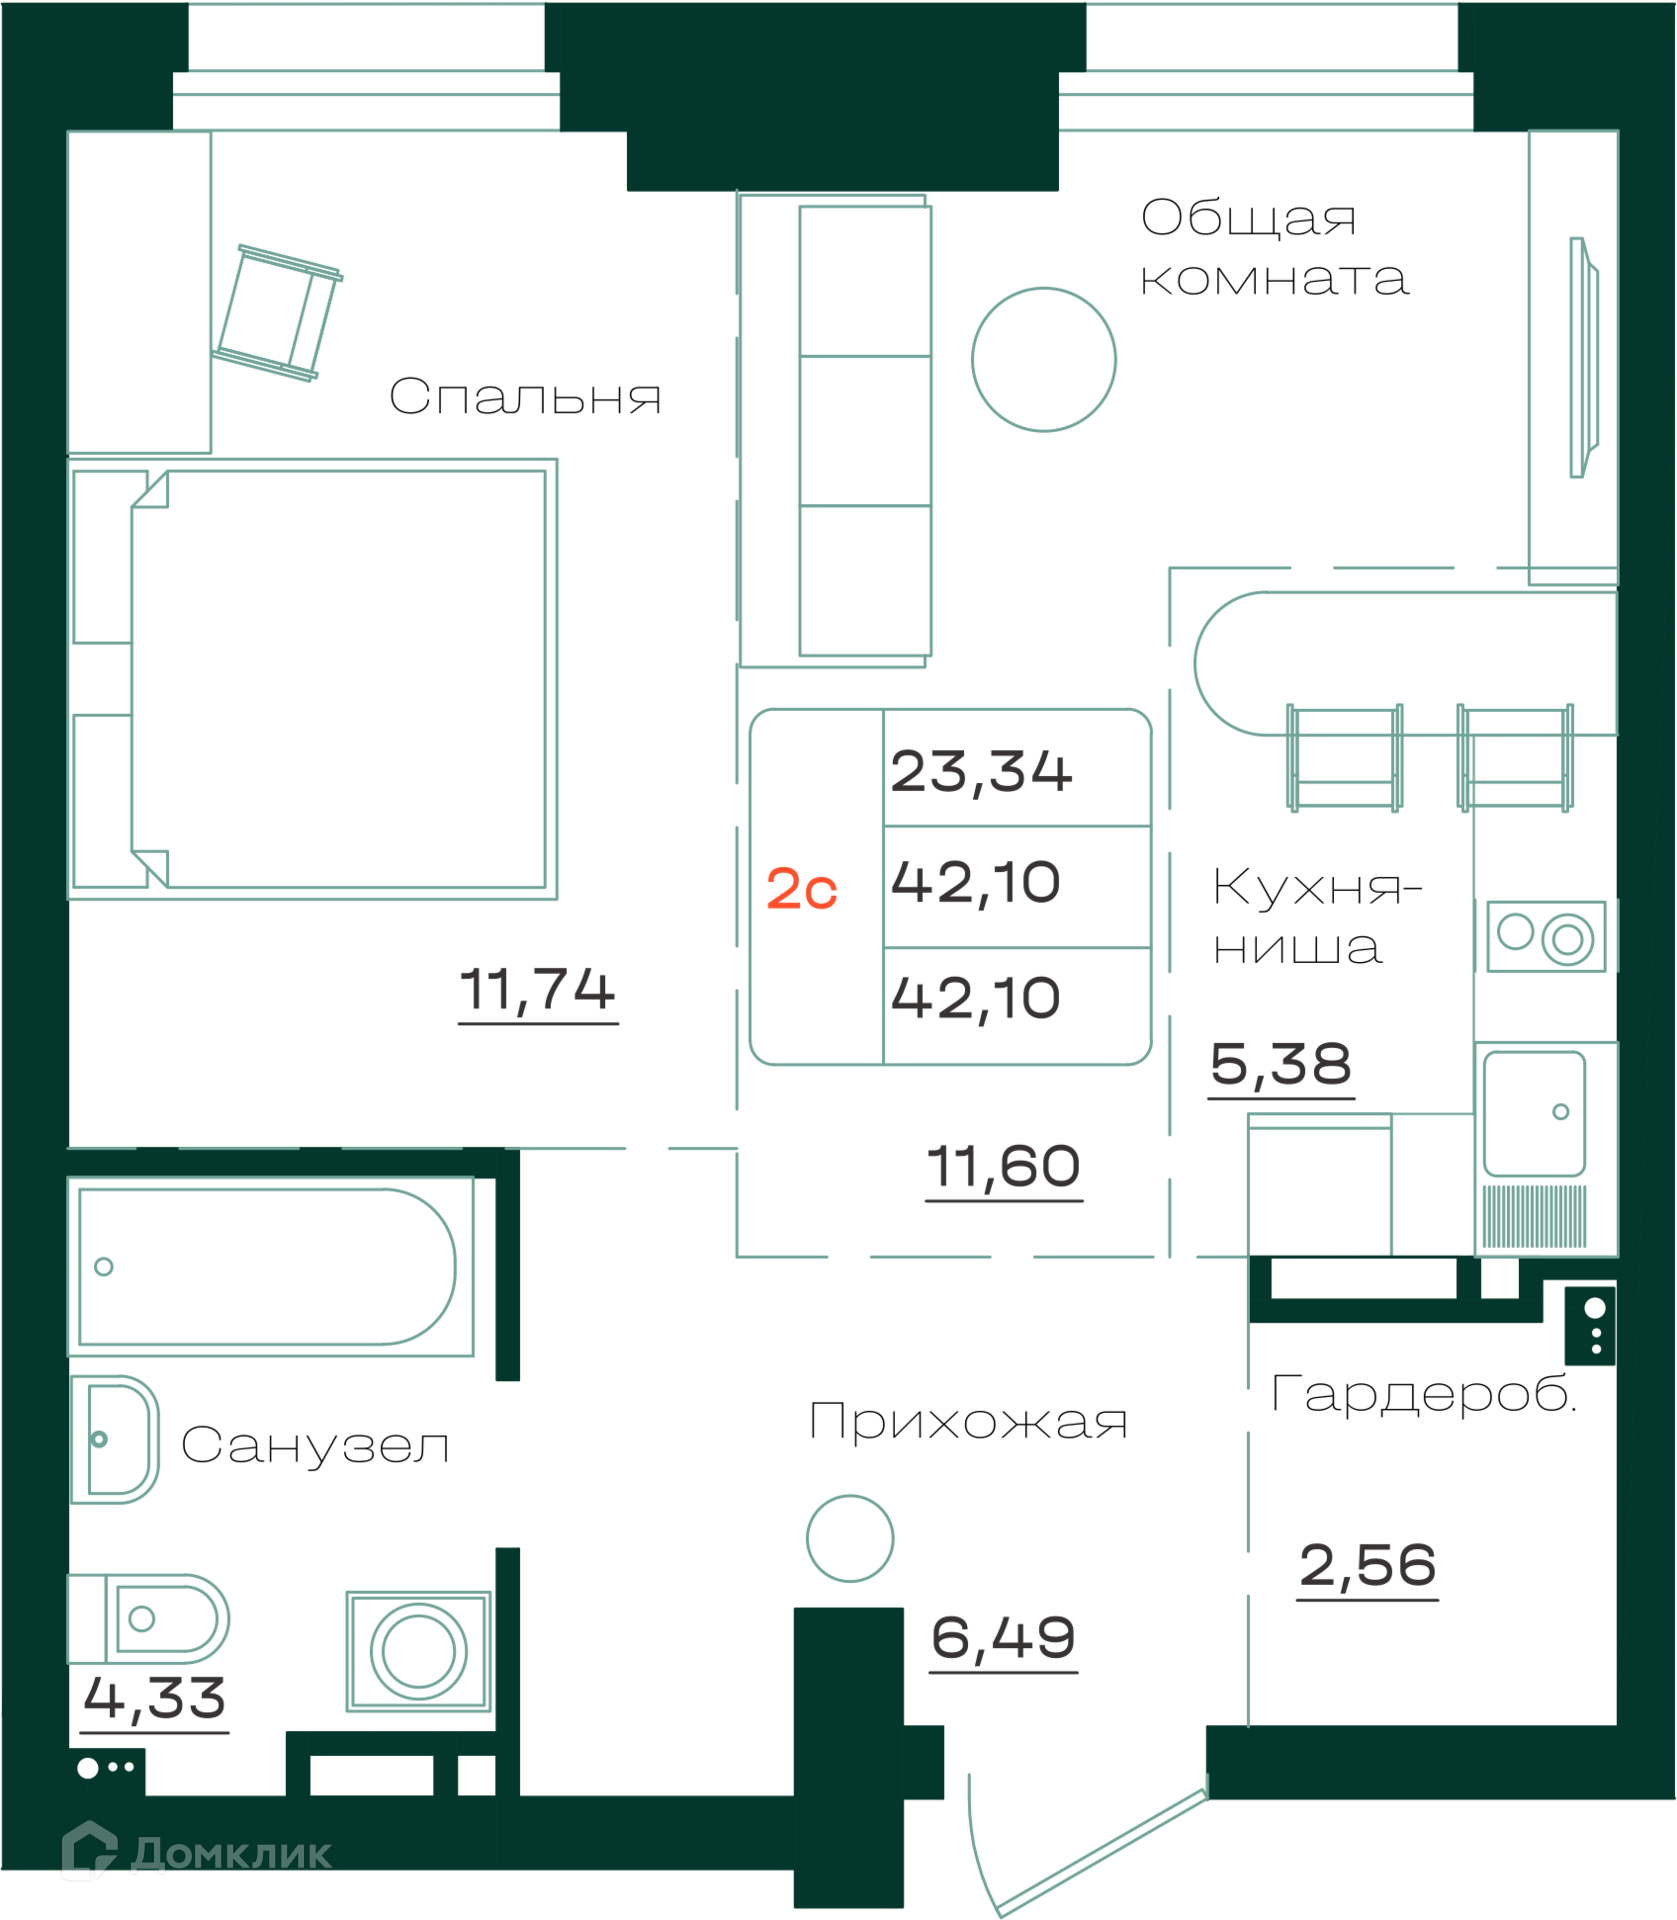 2-комнатная квартира 42.1м2 ЖК Локомотив